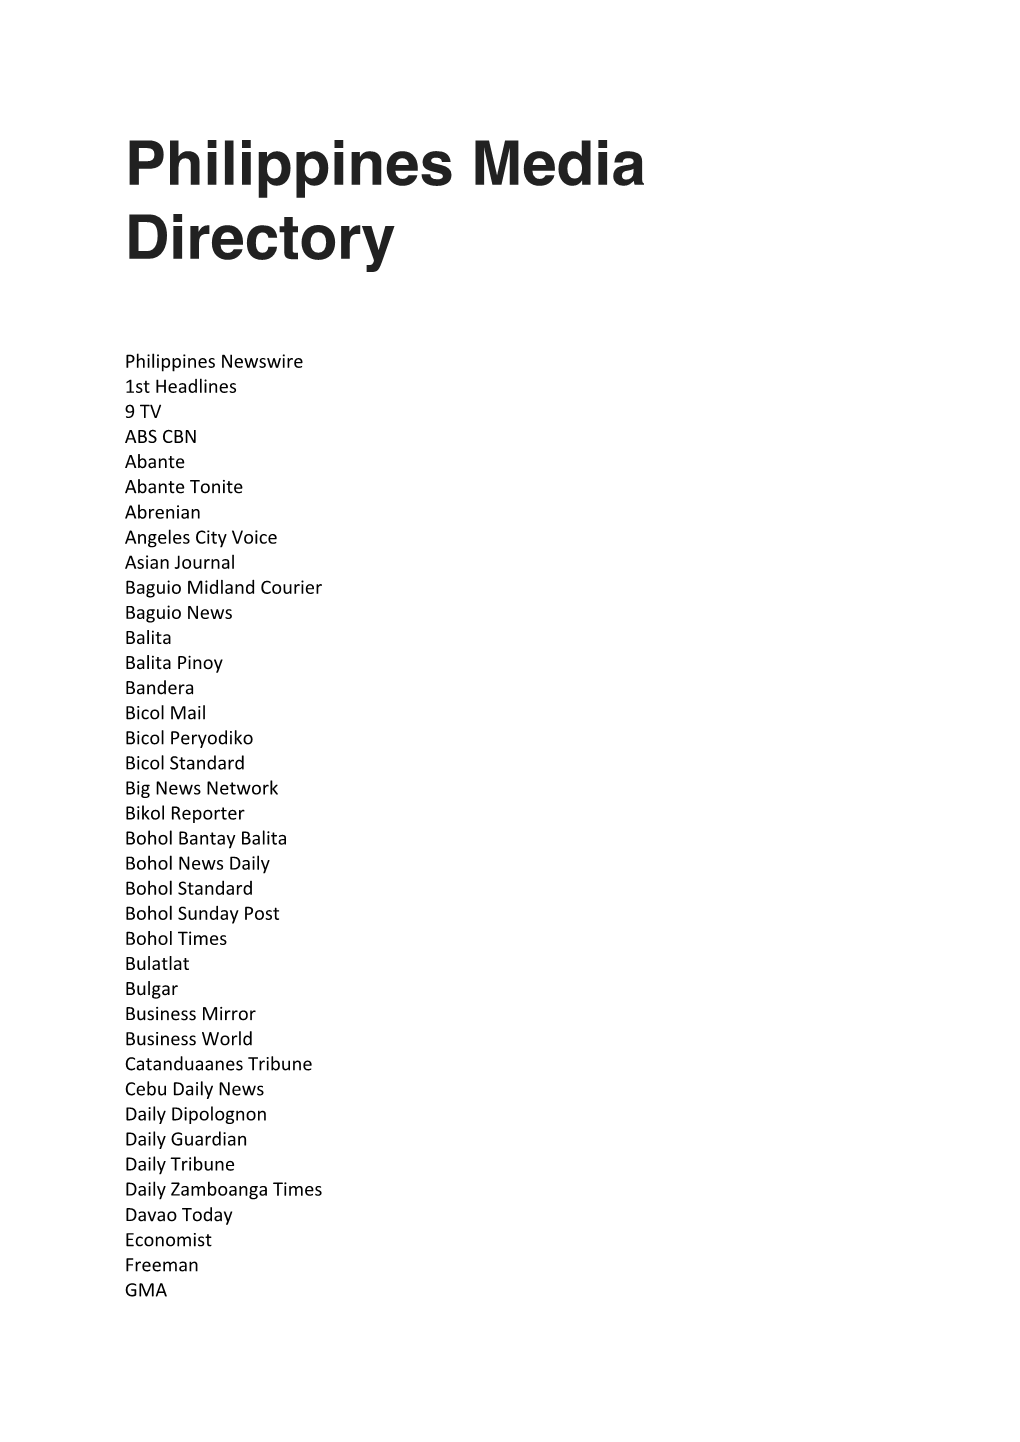 Philippines Media Directory